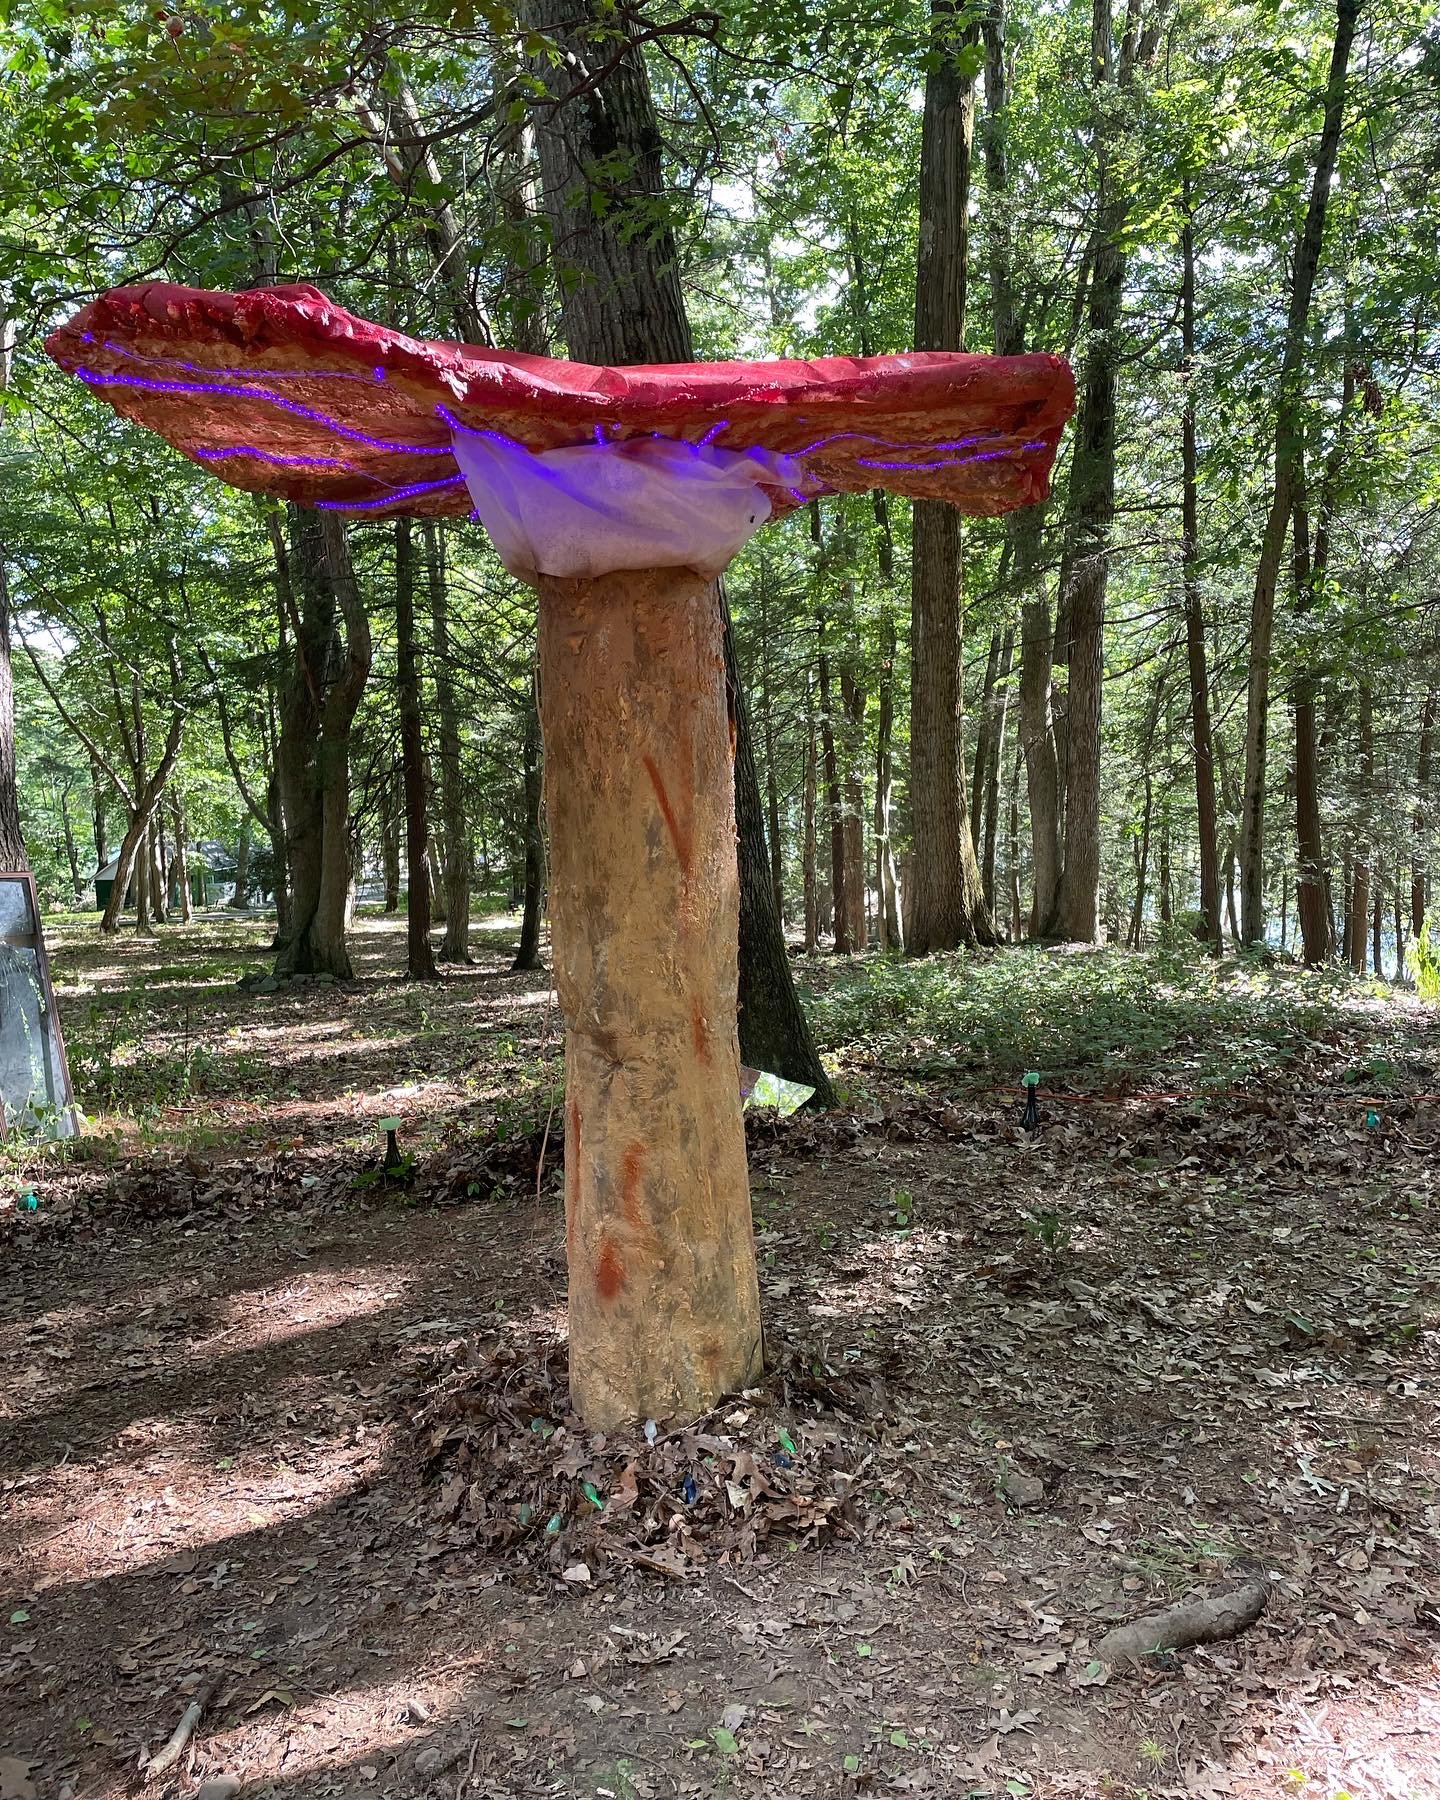 the giant mushroom